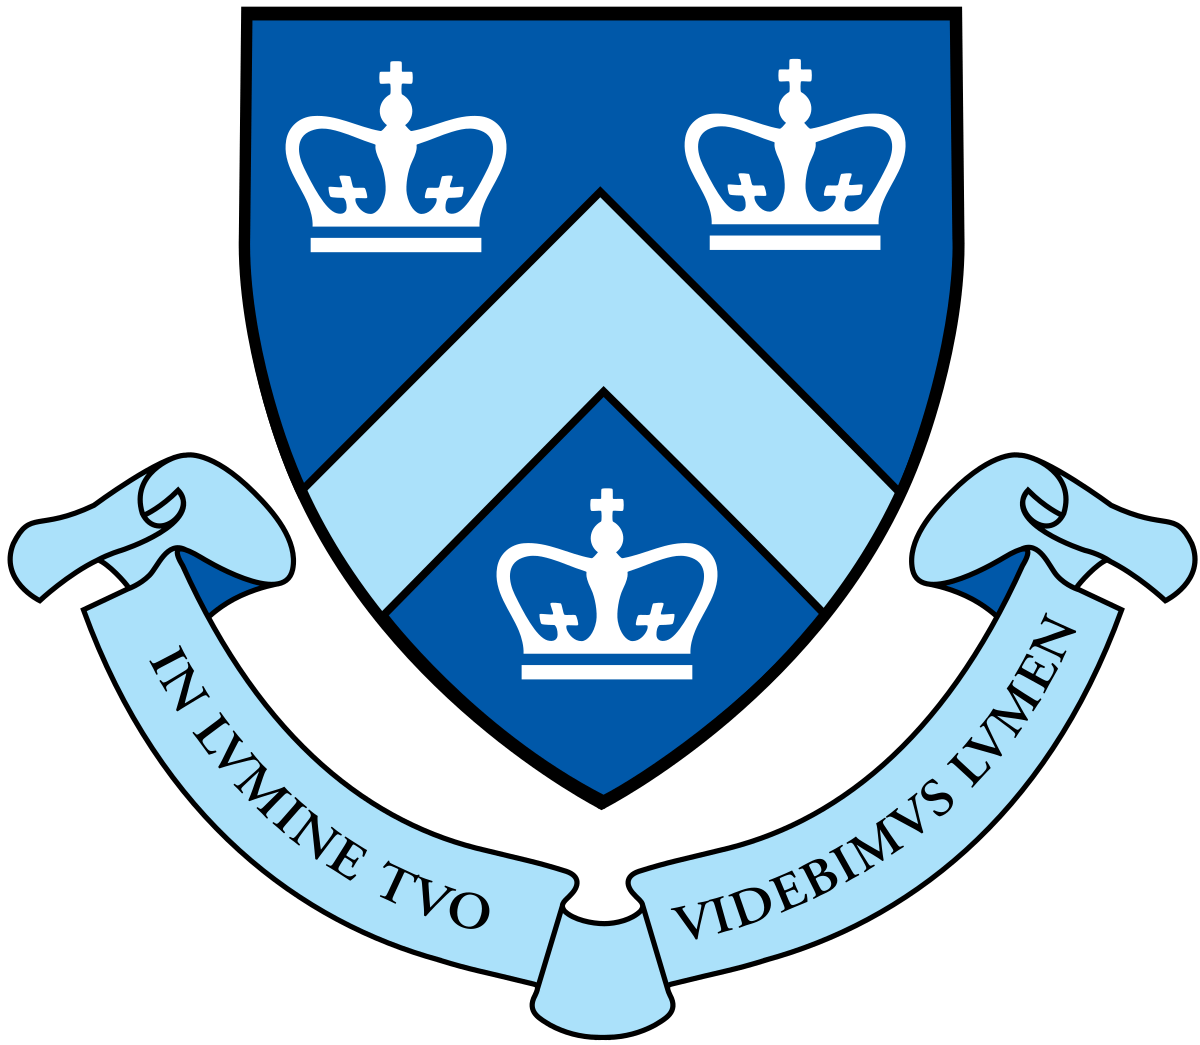 Columbia University Logo - Columbia University